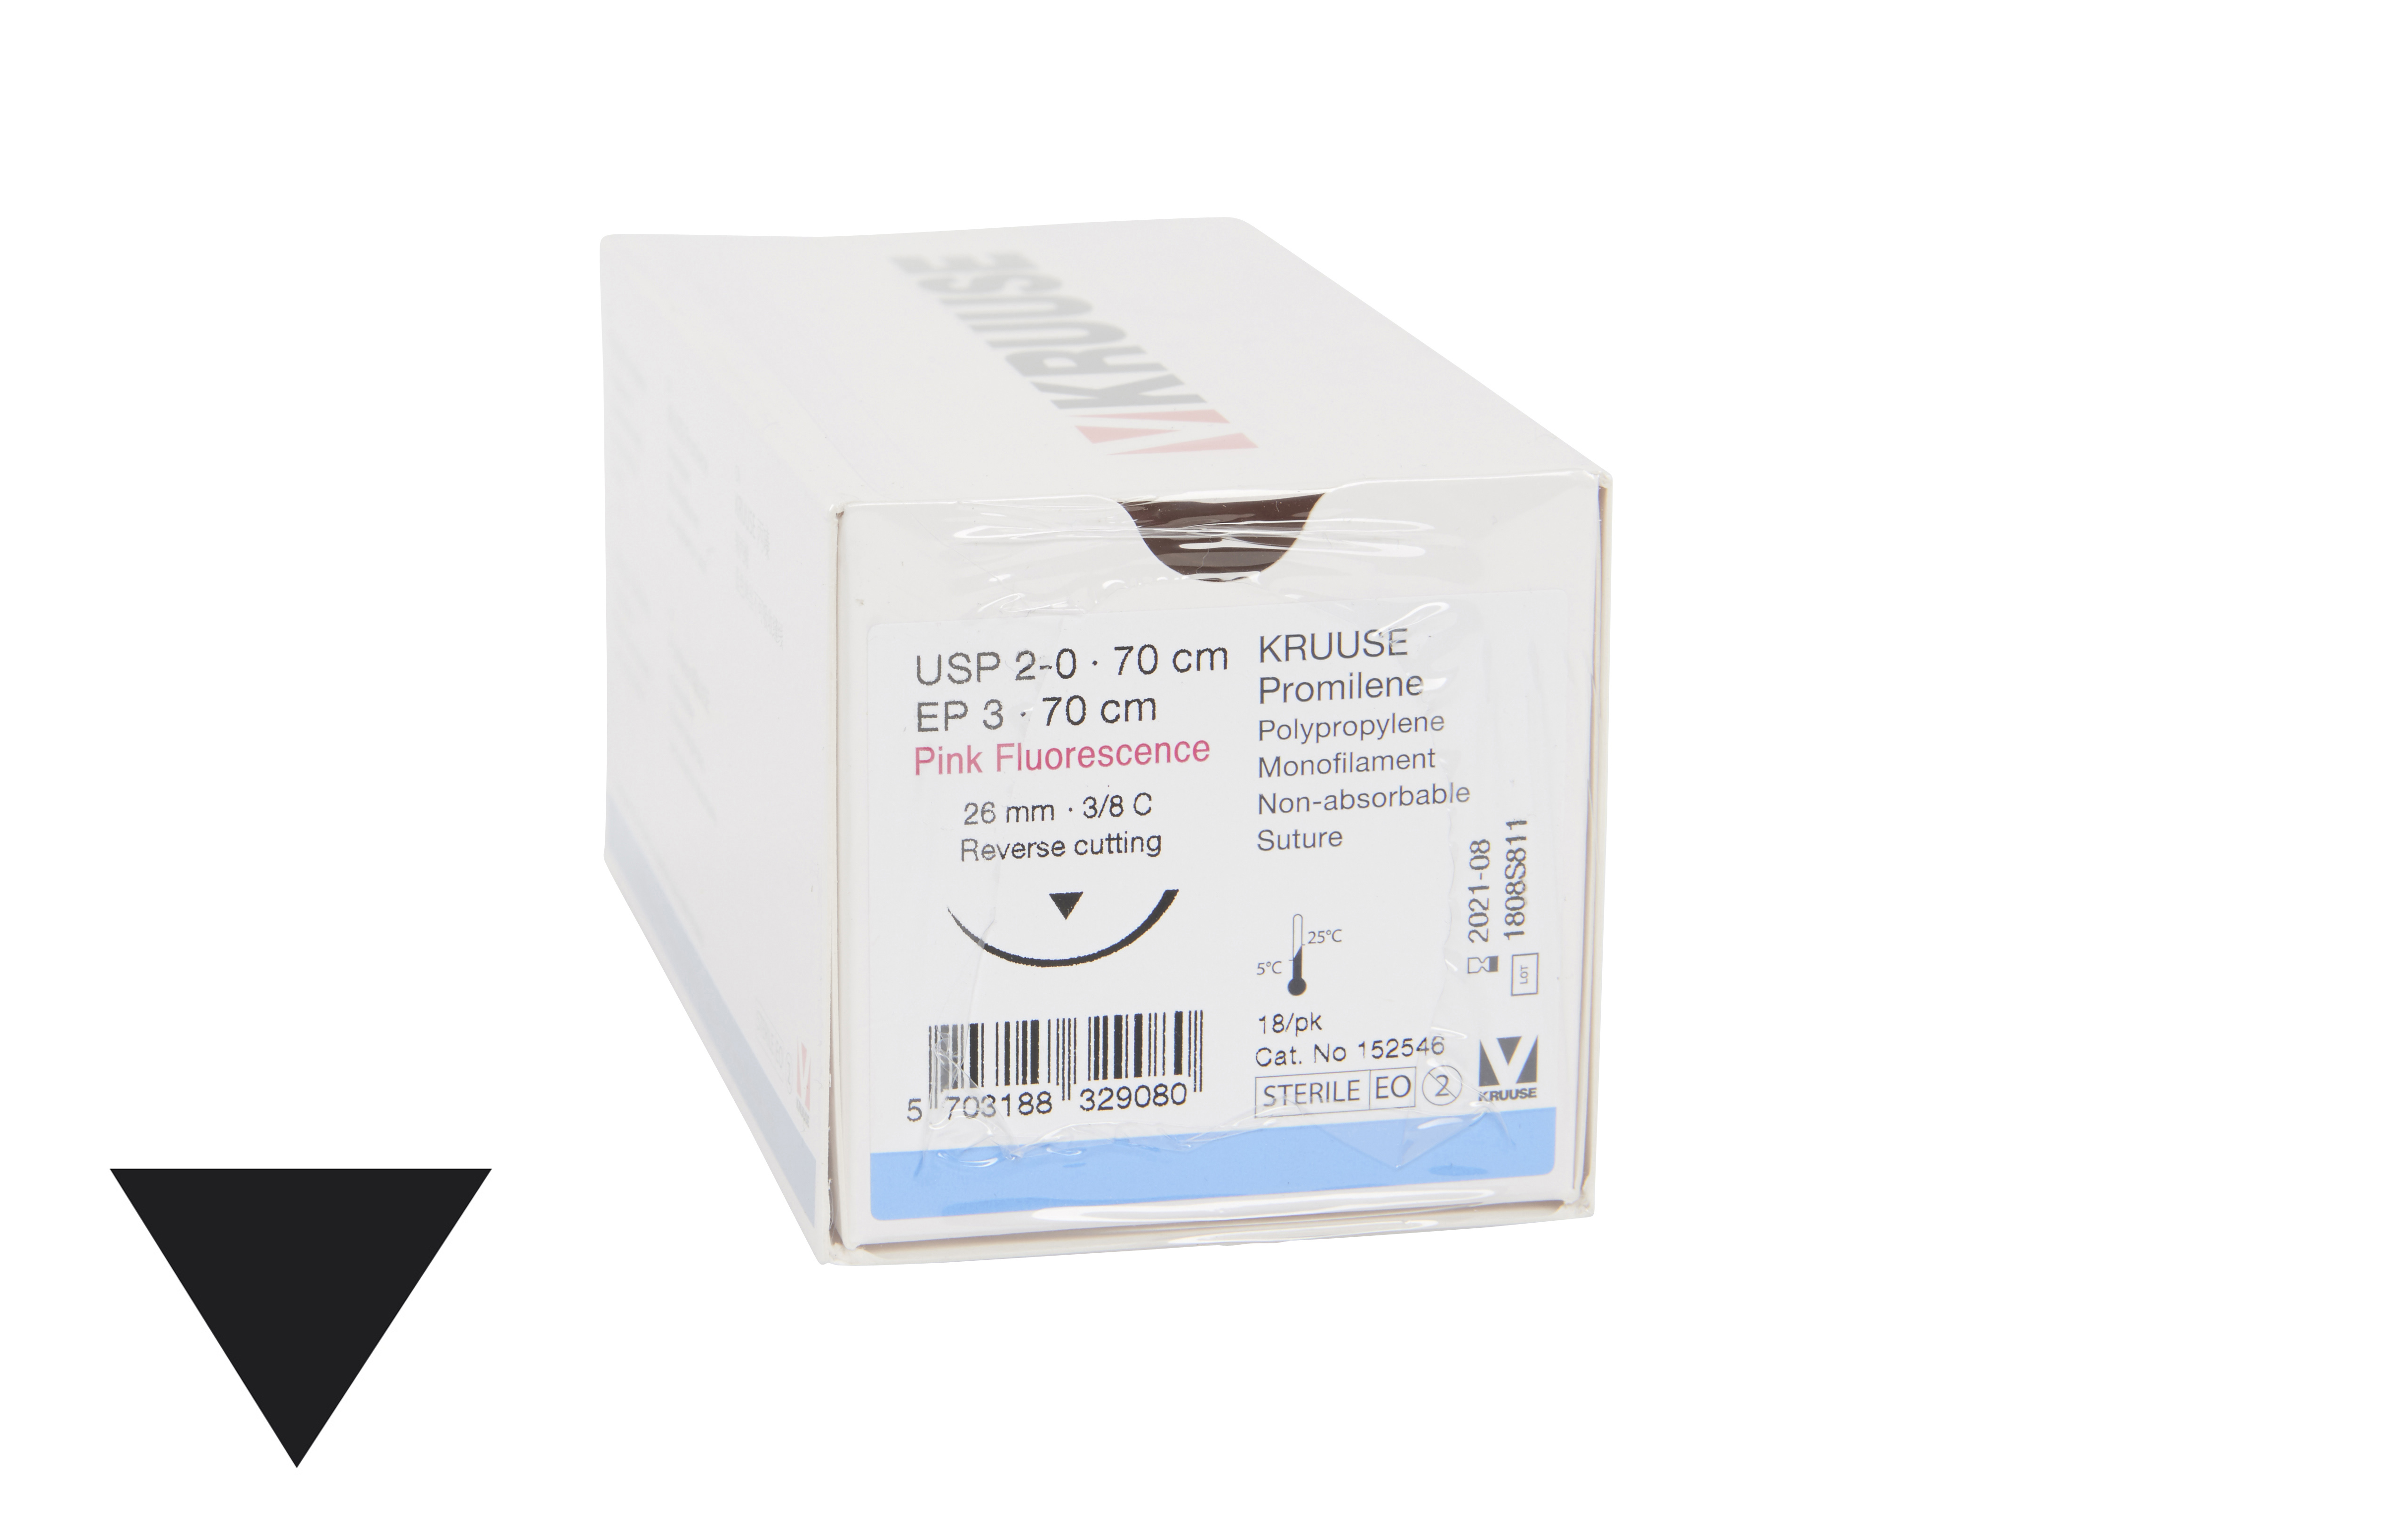 KRUUSE Promilene Suture, USP 2-0, 70 cm, pink (fluorescence), needle: 26 mm, 3/8 C, RC, 18/pk